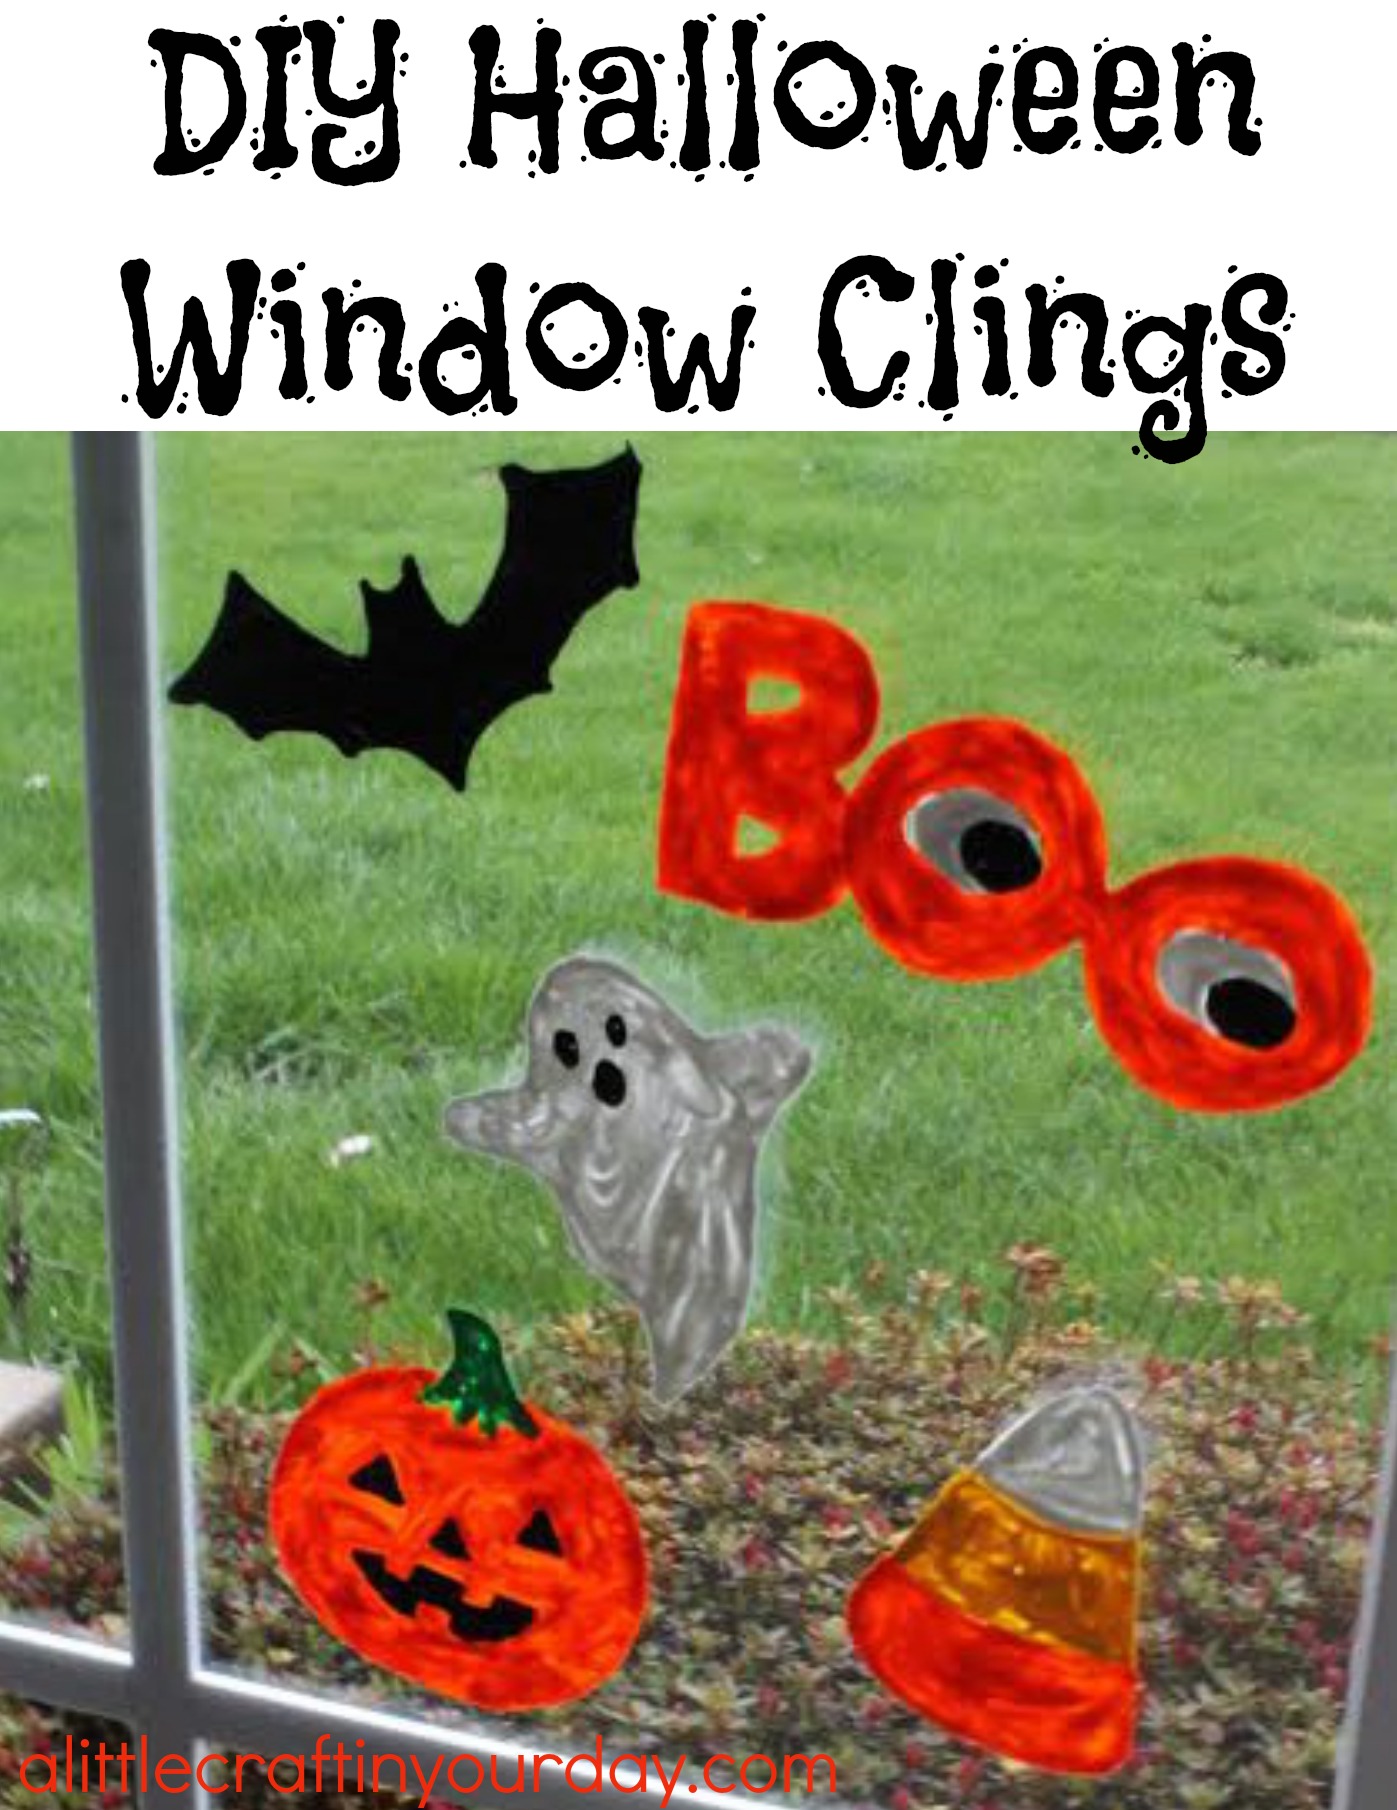 ❤ How to store halloween gel window clings